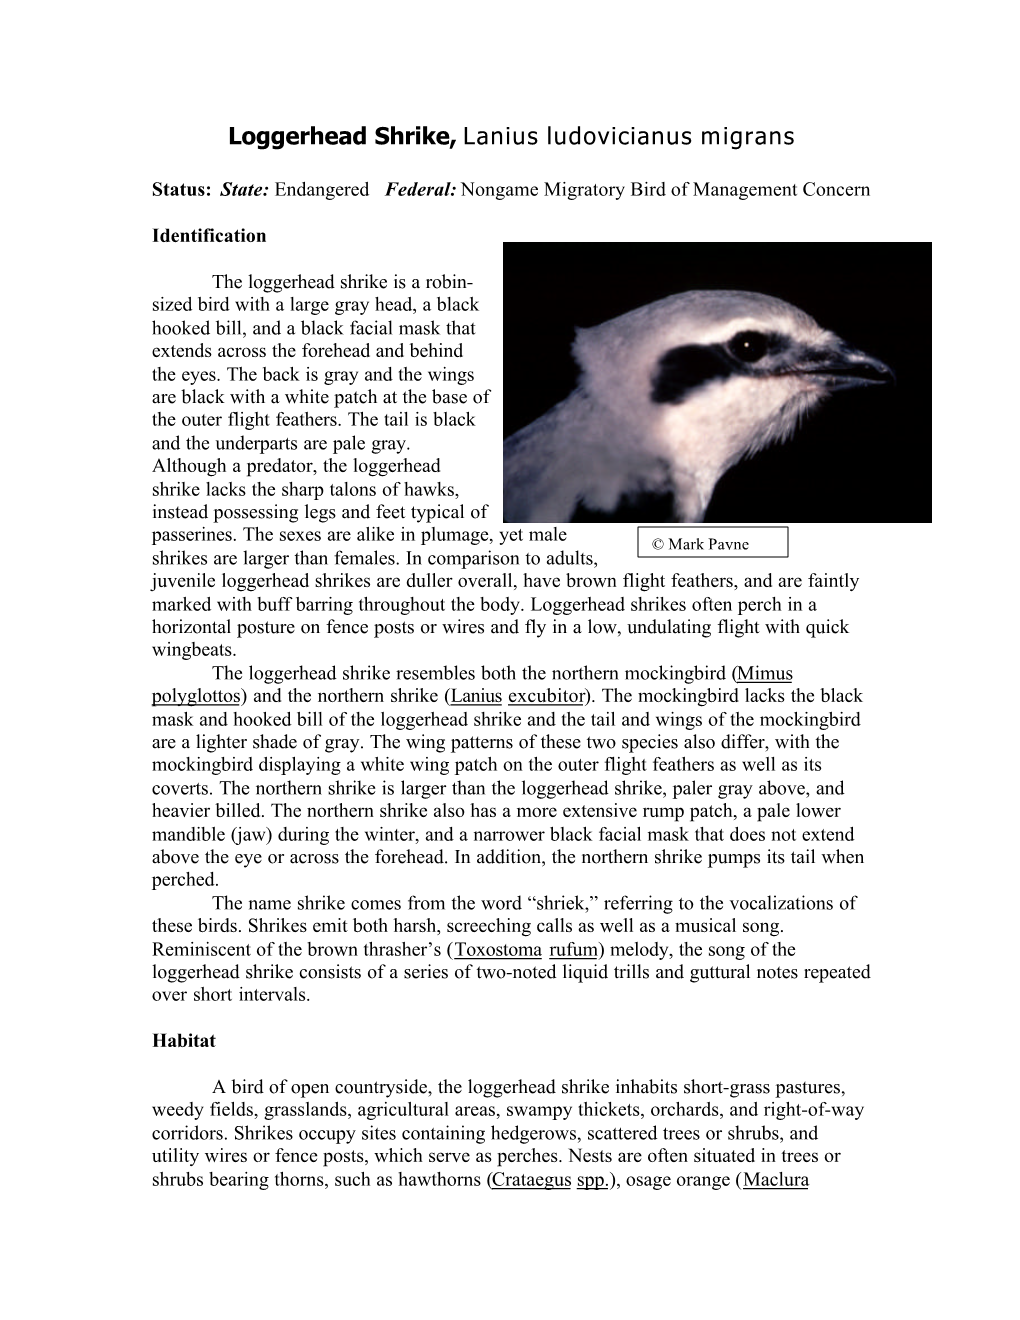 Loggerhead Shrike, Lanius Ludovicianus Migrans